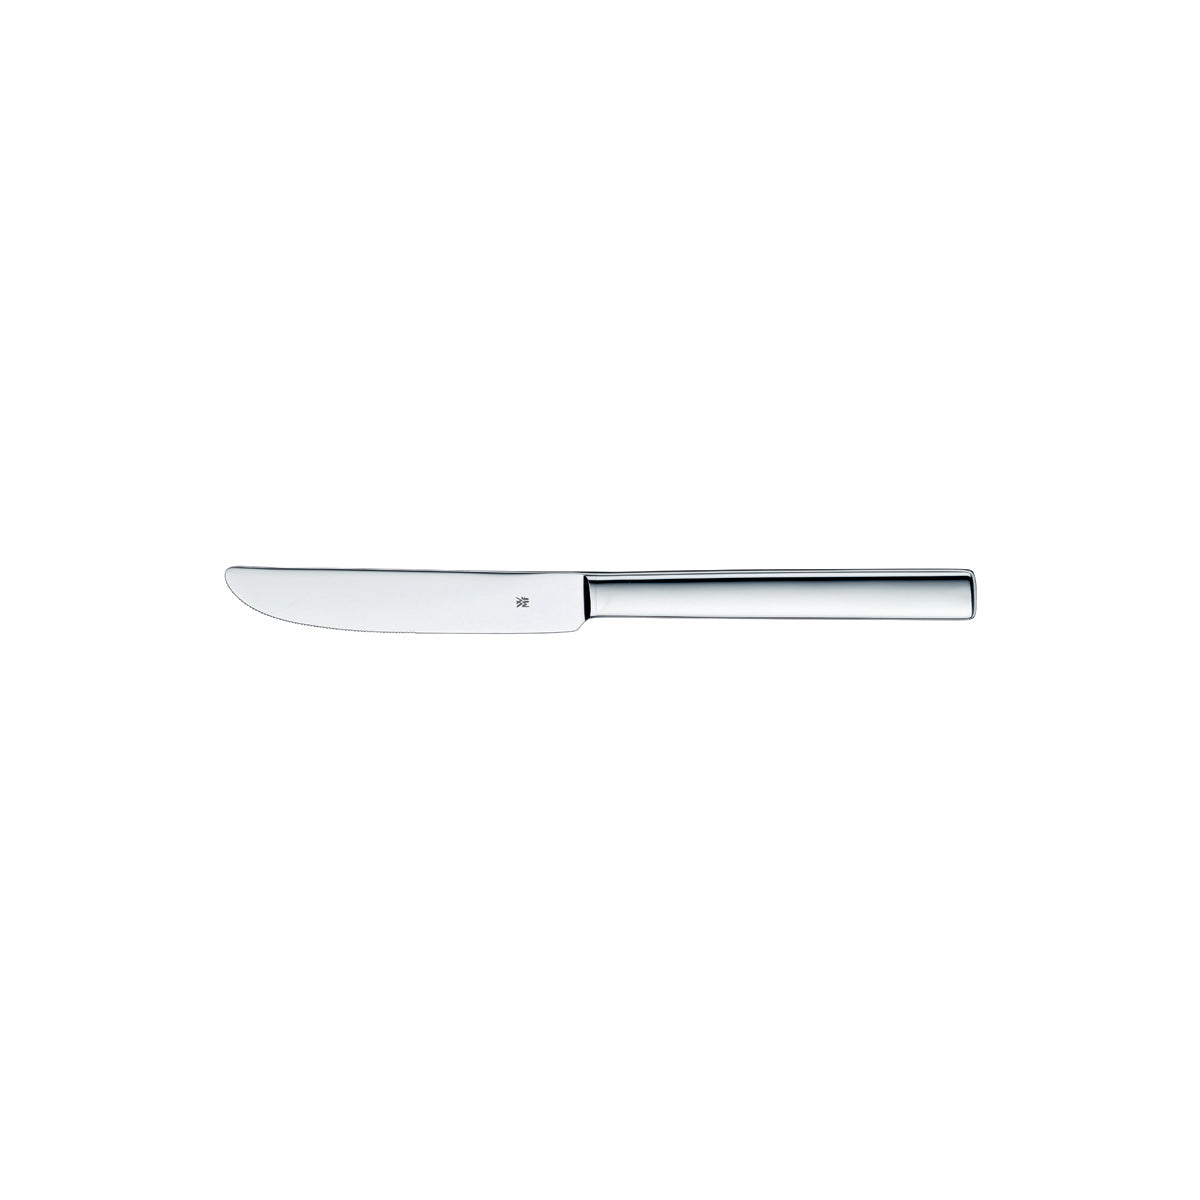 10.5303.6067 WMF Unic Table Knife - Hollow Handle Silverplated Tomkin Australia Hospitality Supplies